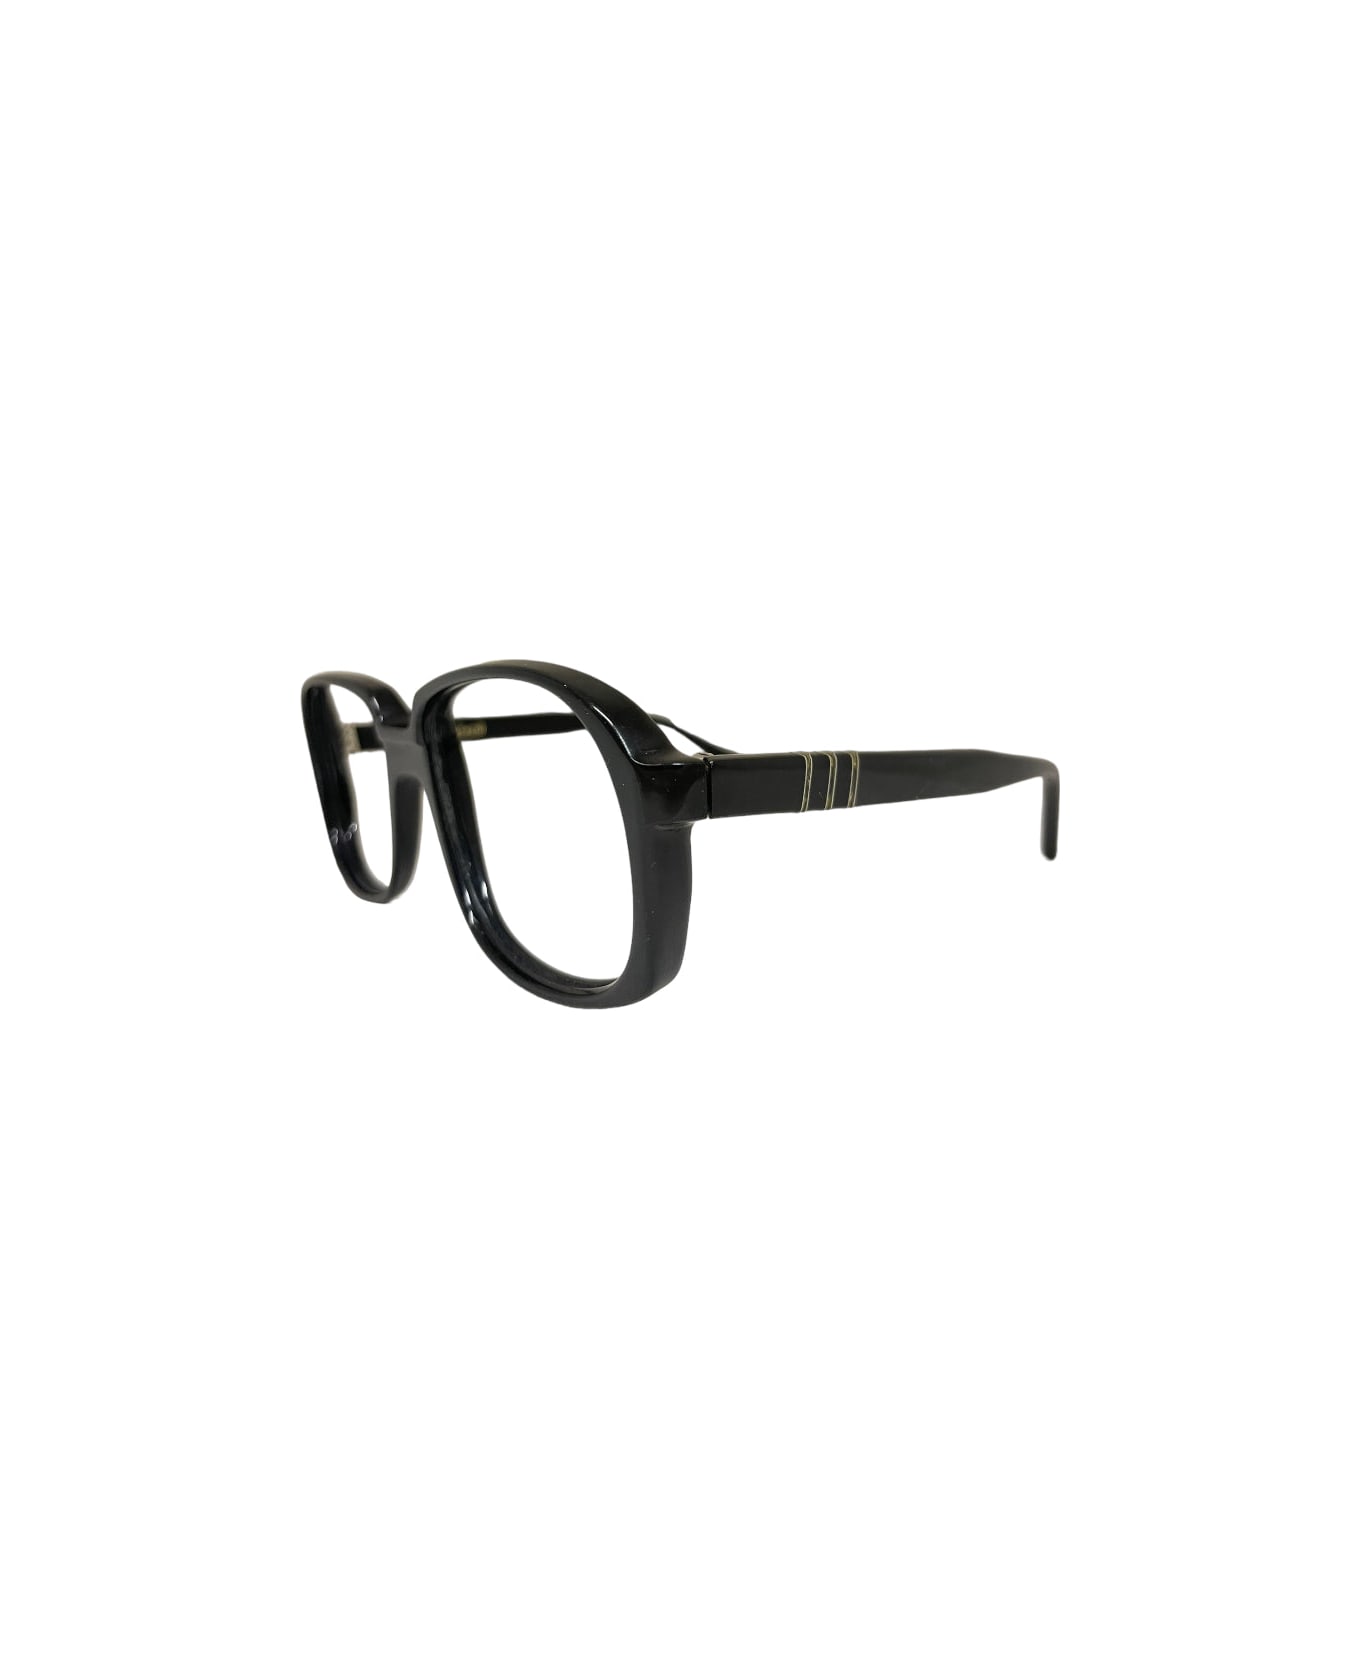 Persol Patent - Black Sunglasses サングラス